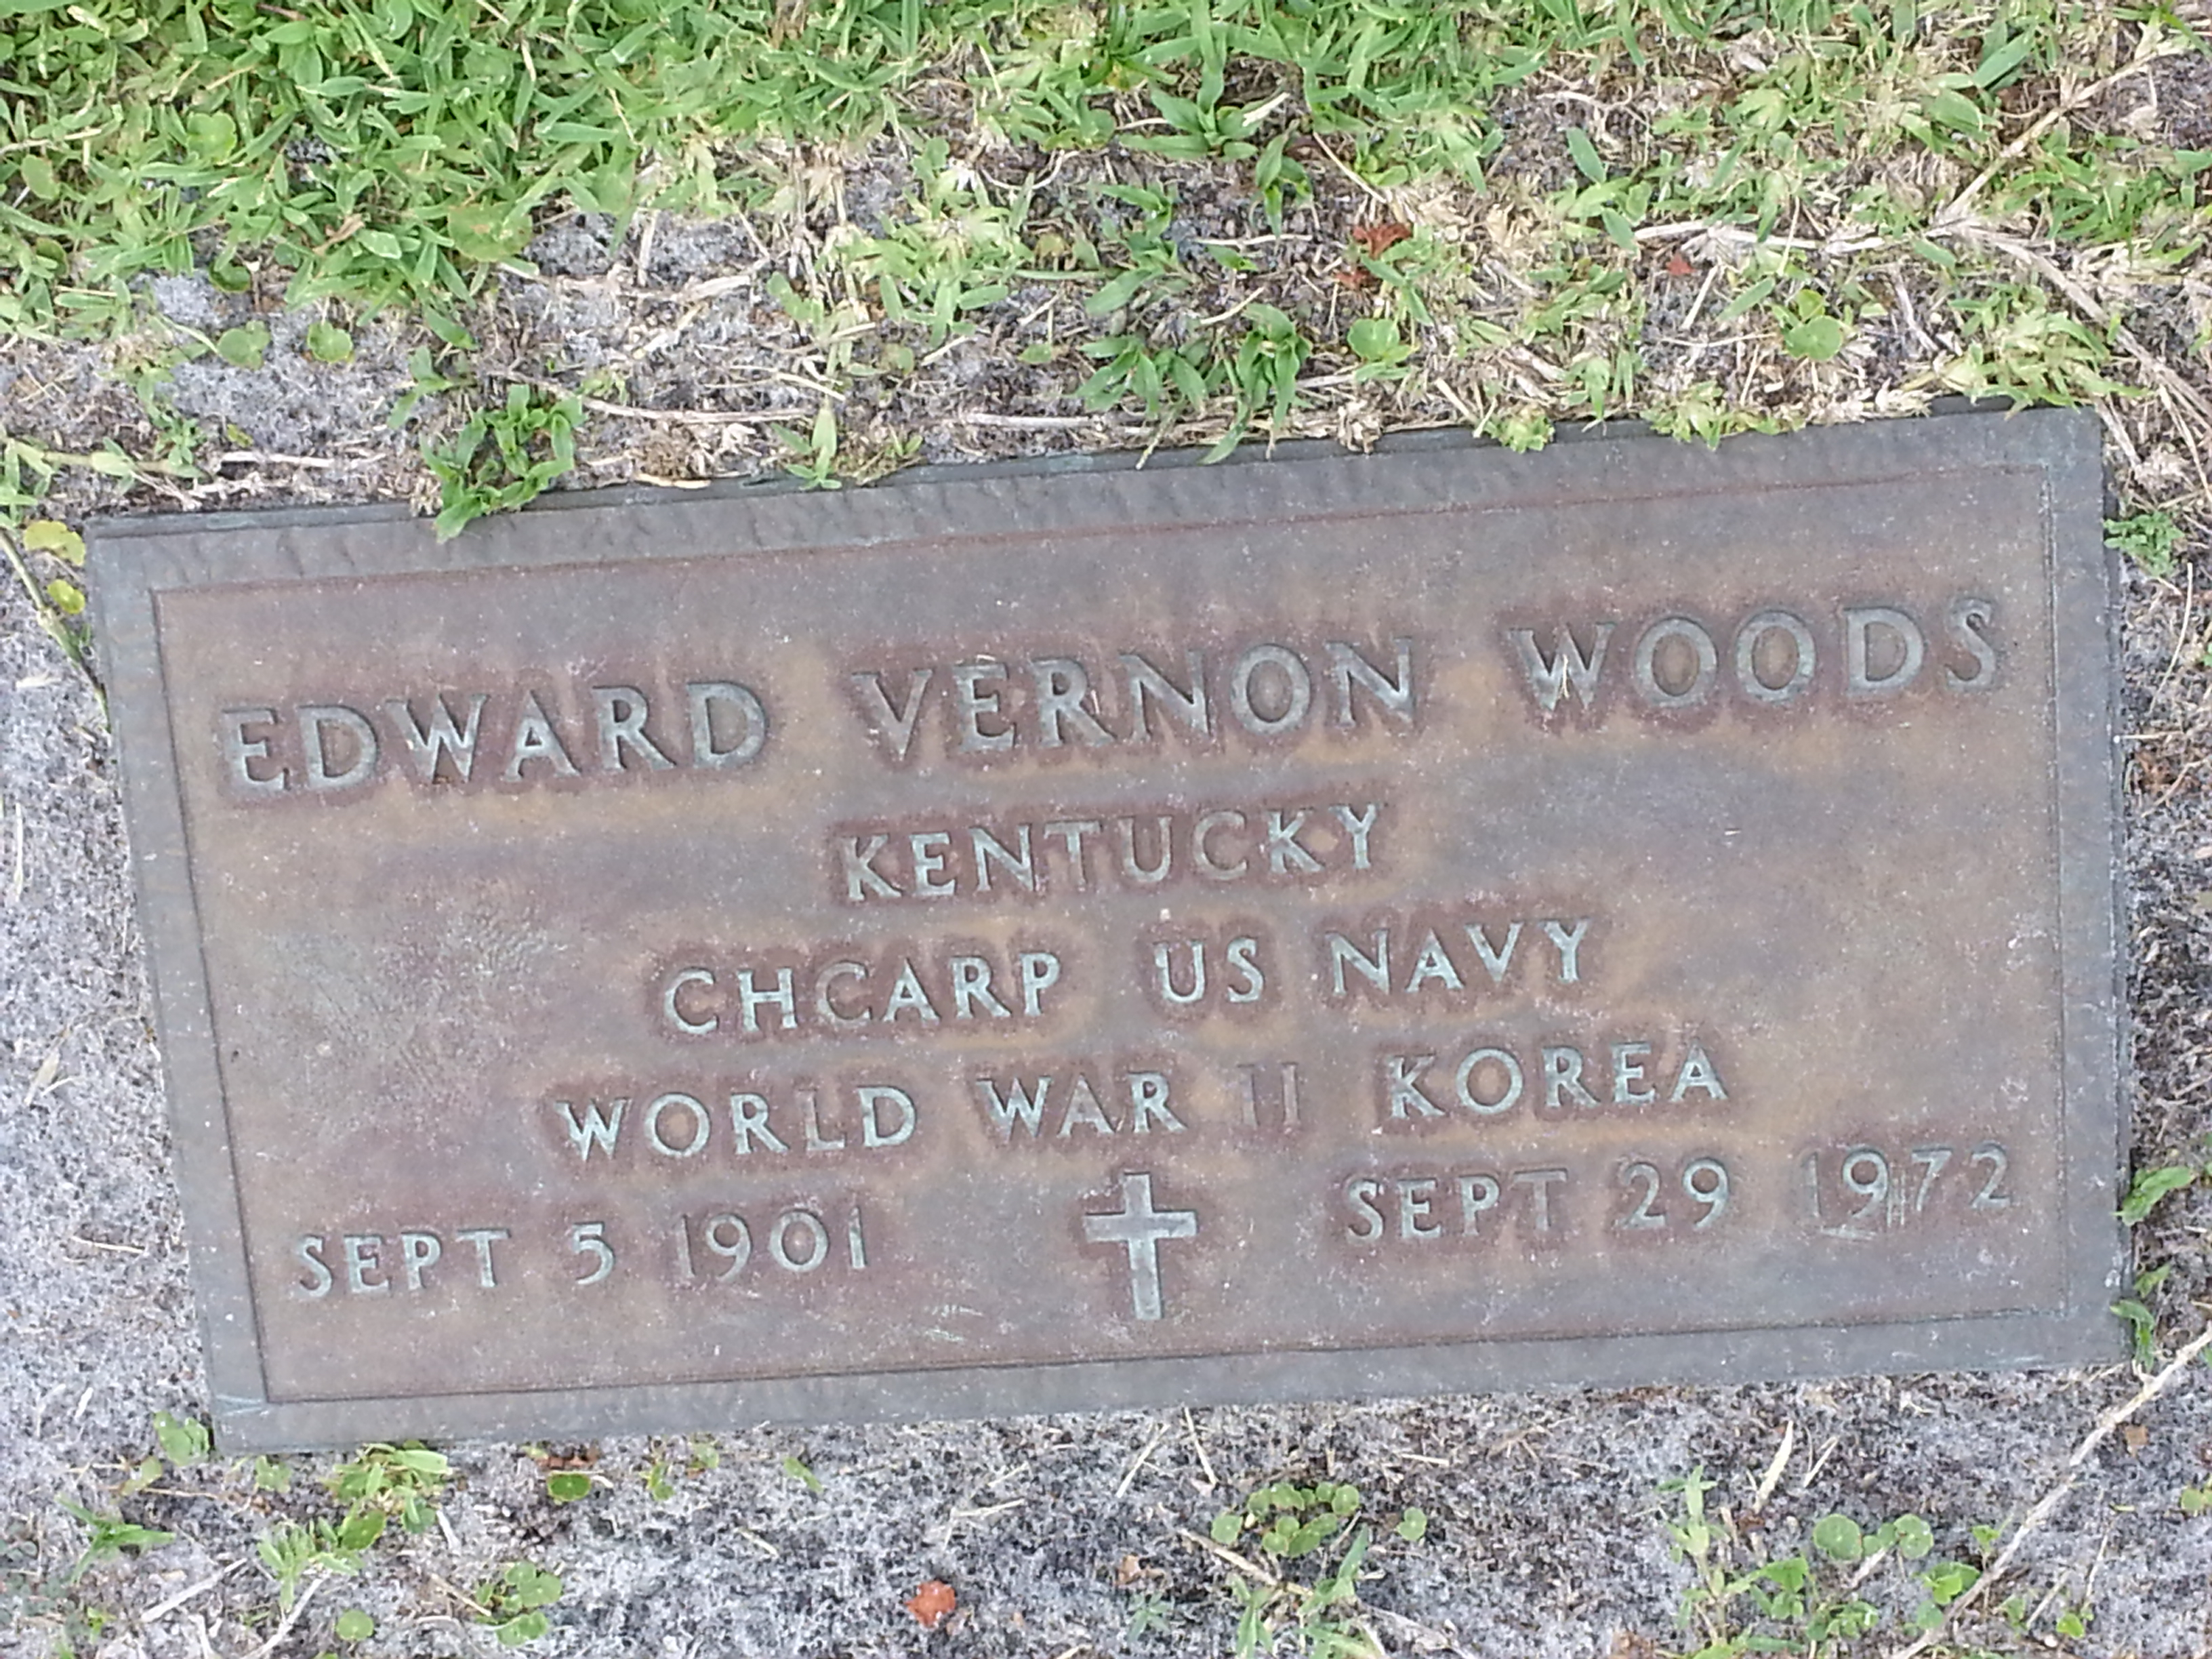 Edward Vernon Woods